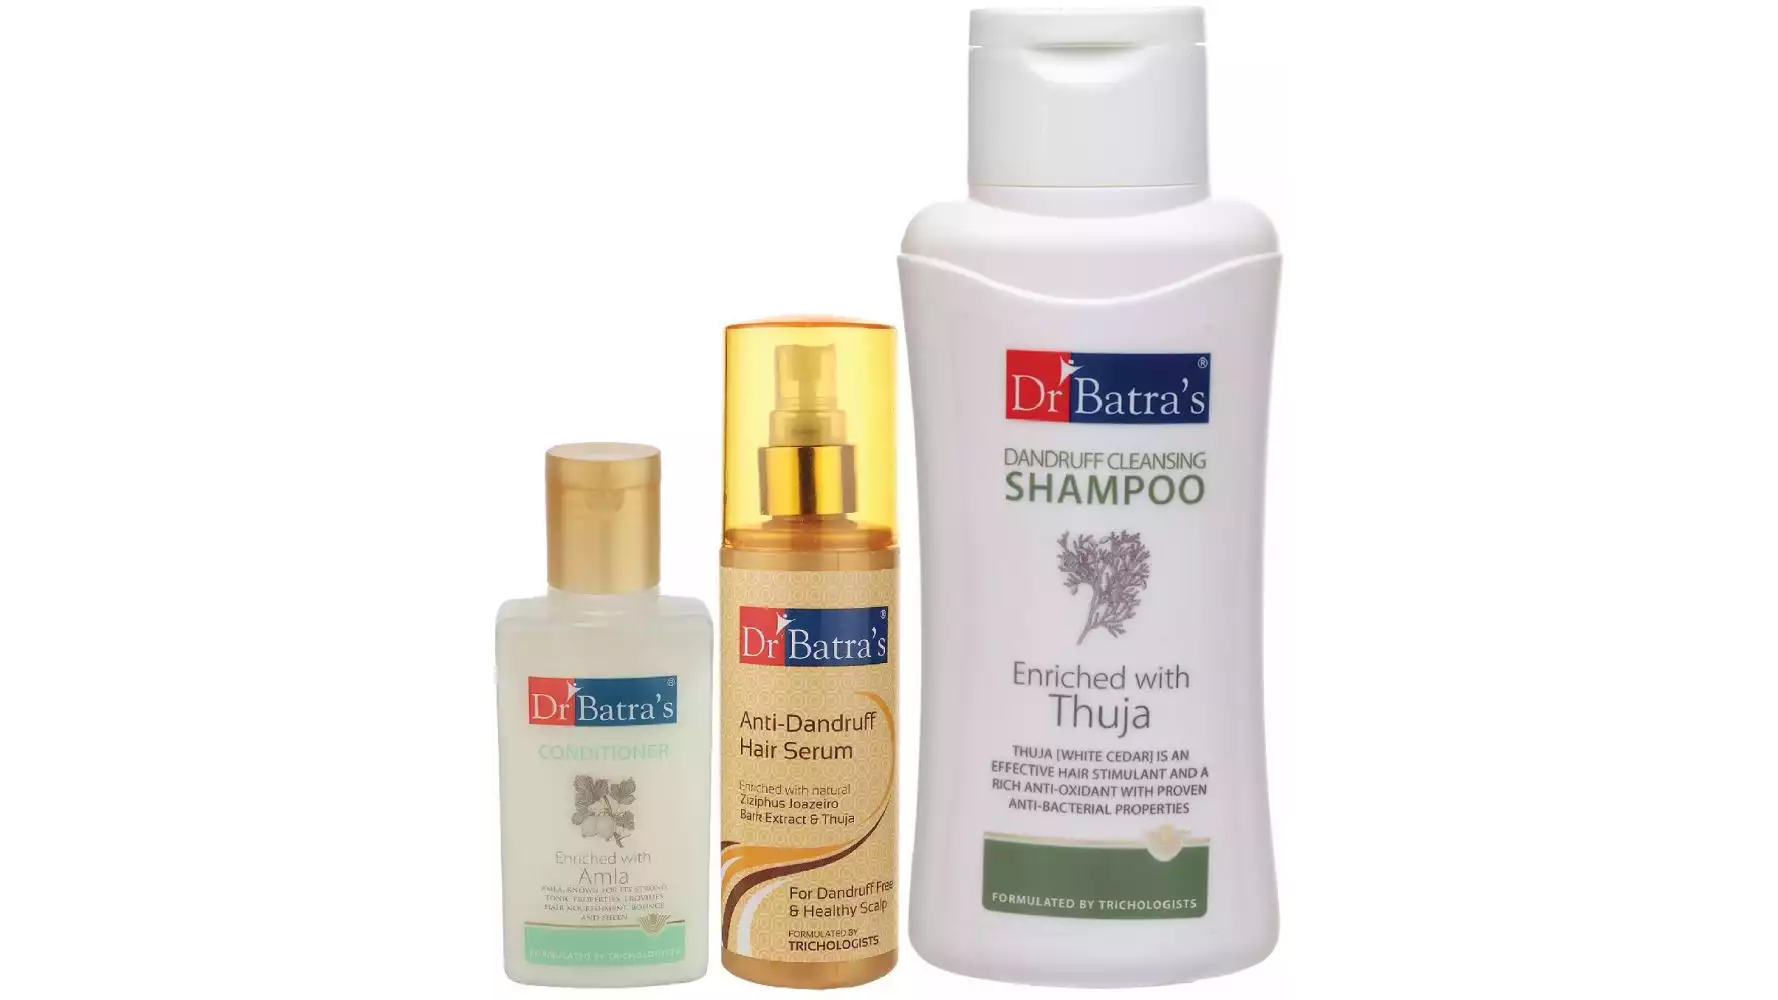 Dr Batras Anti Dandruff Hair Serum, Conditioner And Dandruff Cleansing Shampoo Combo (125ML+100ML+500ML) (1Pack)